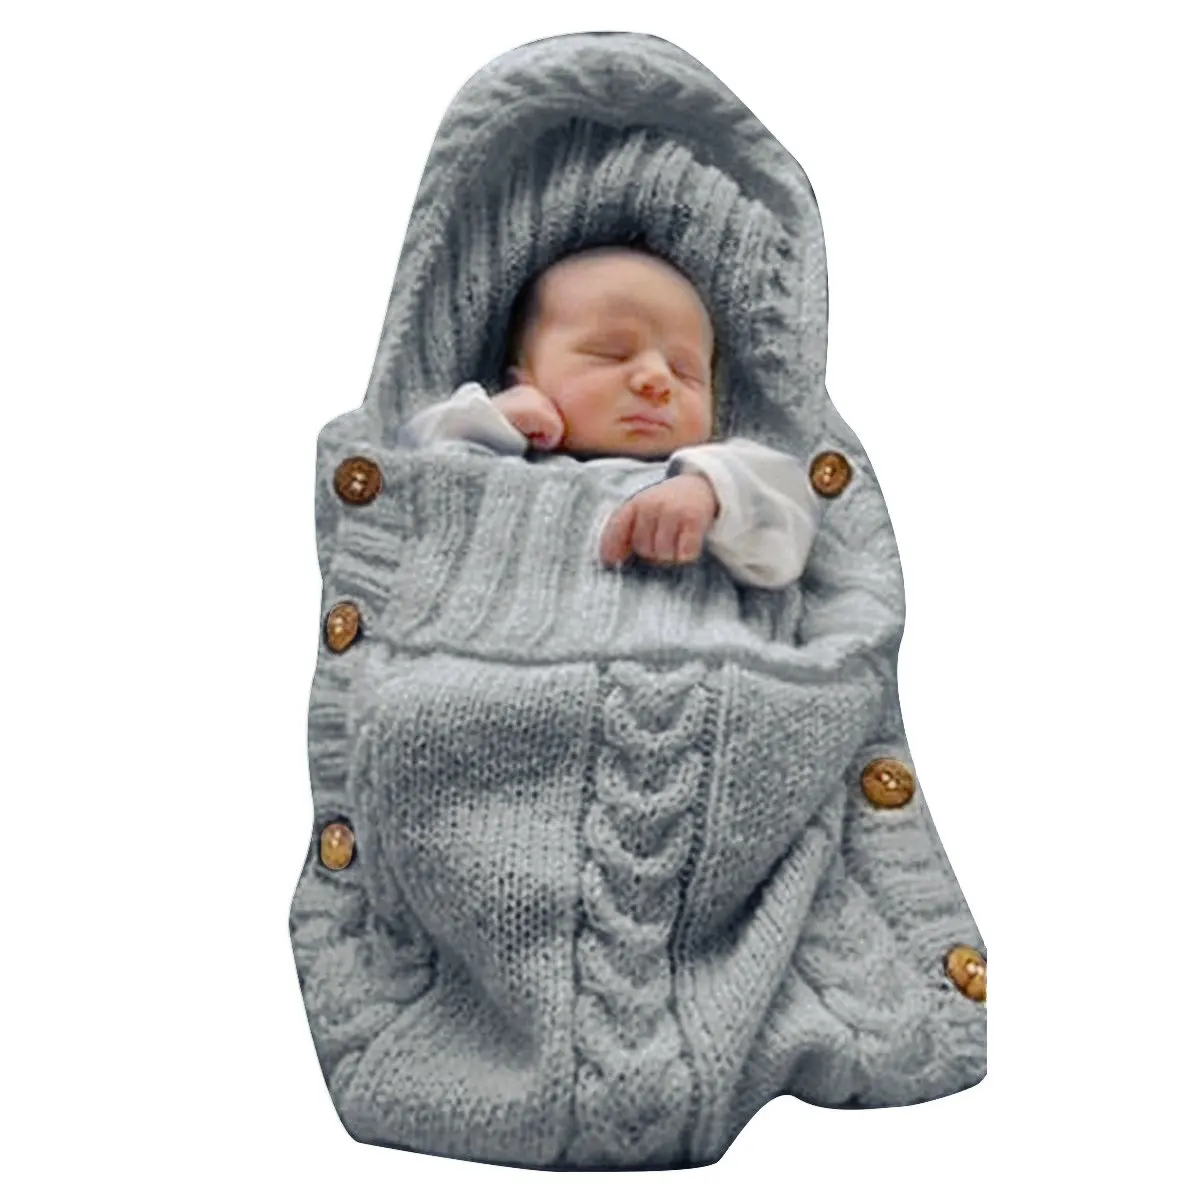 Unipampa Manta Ajustable para bebé 3 Unidades Unisexo 100% Algodón Swaddle Wrap para Recién Nacidos Manta Envolvente para Bebé para Saco-s De Dormir Bebes Recien Nacidos 0-3 Meses 